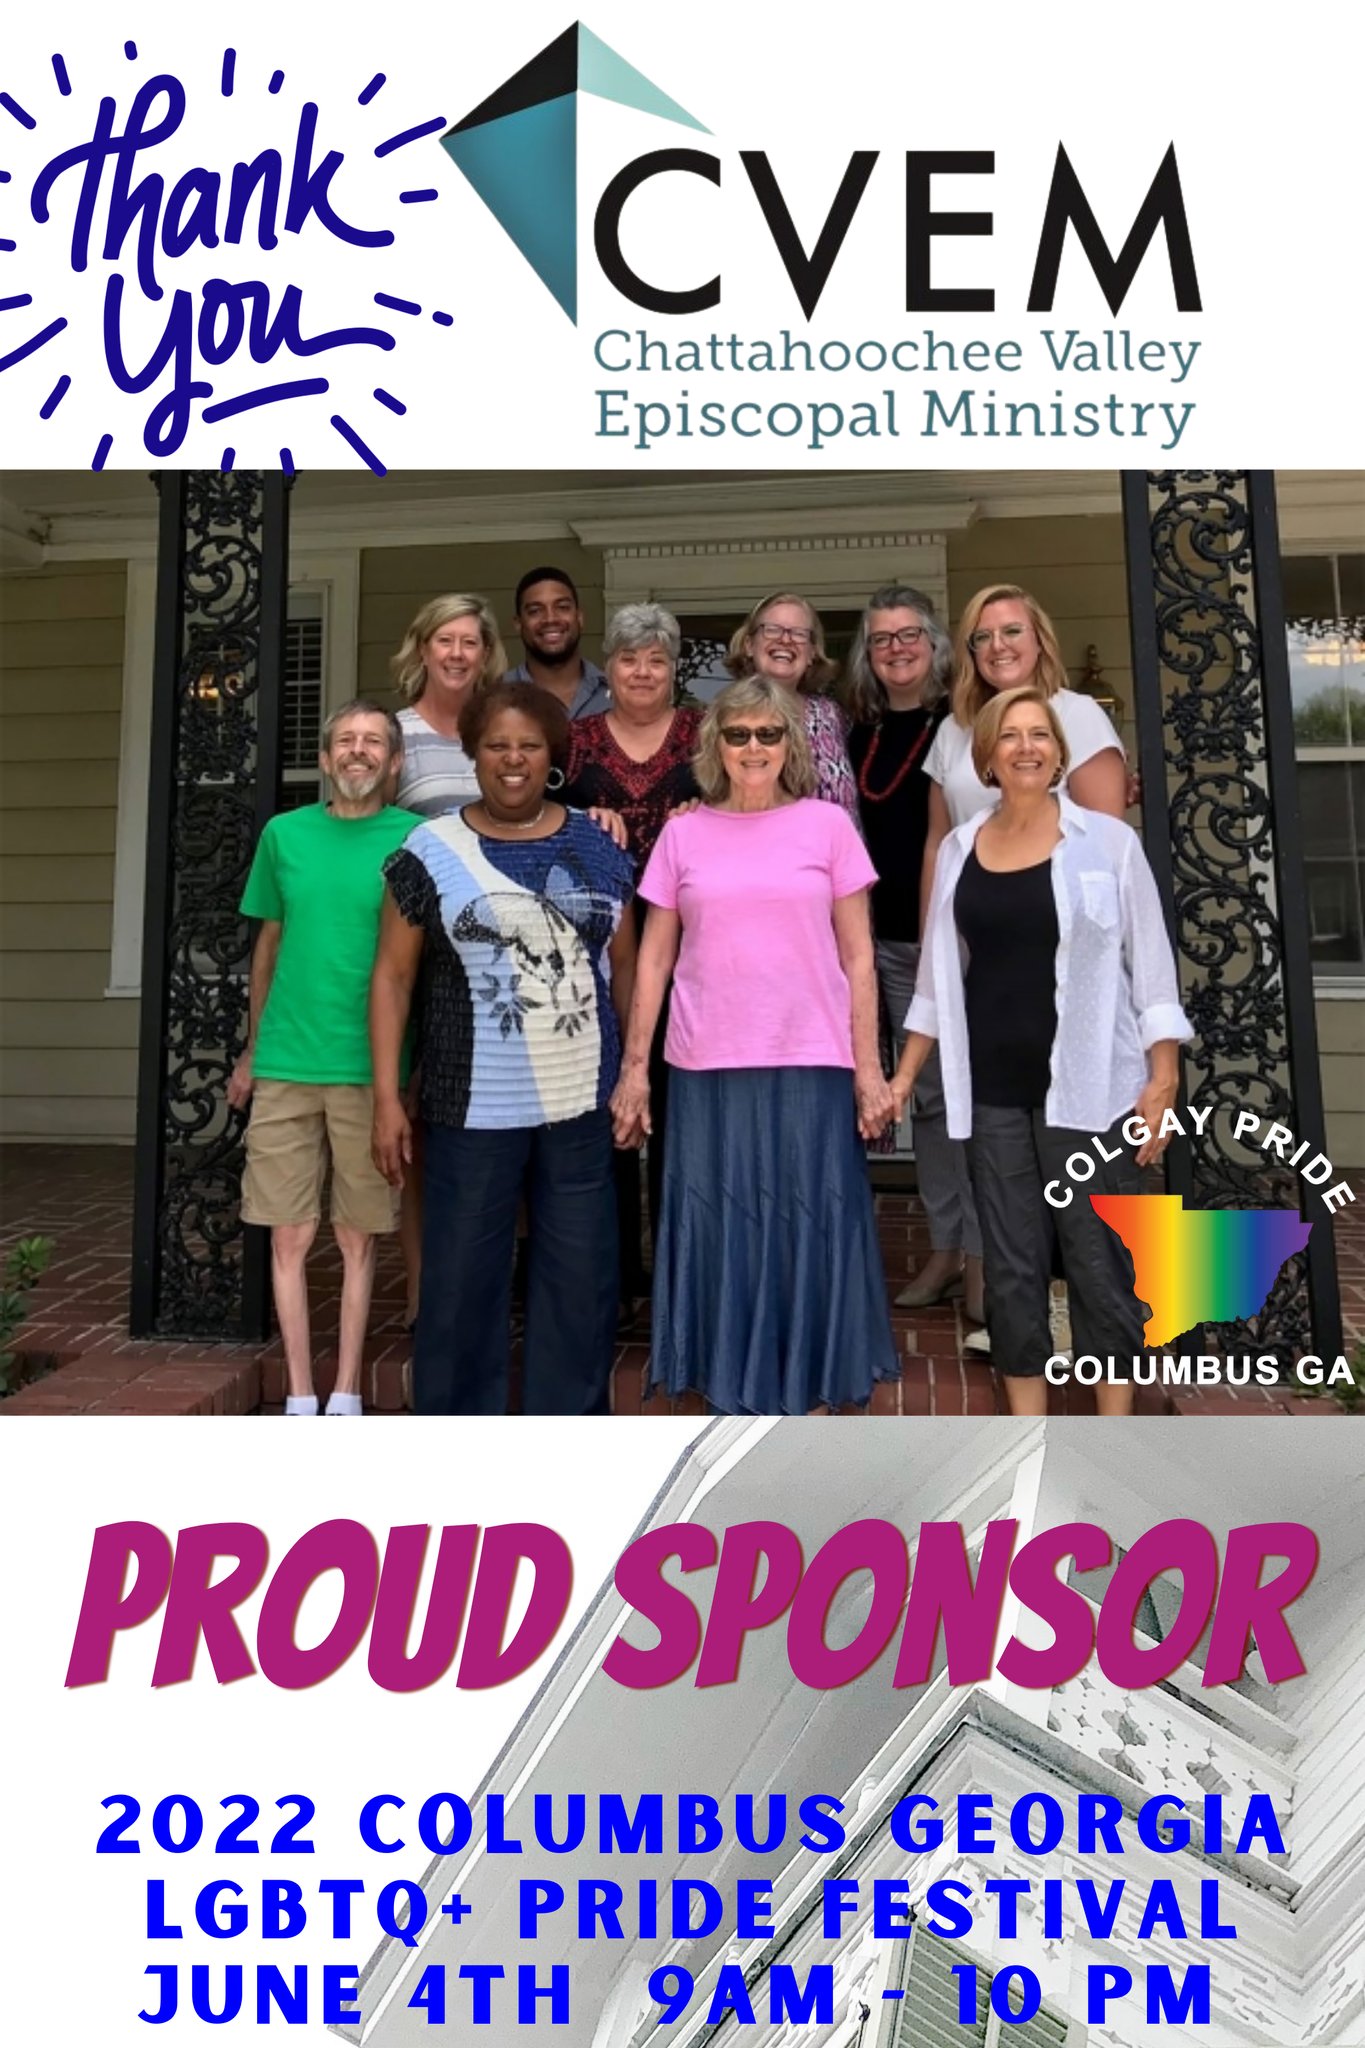 Chattahoochee Valley Episcopal Ministry